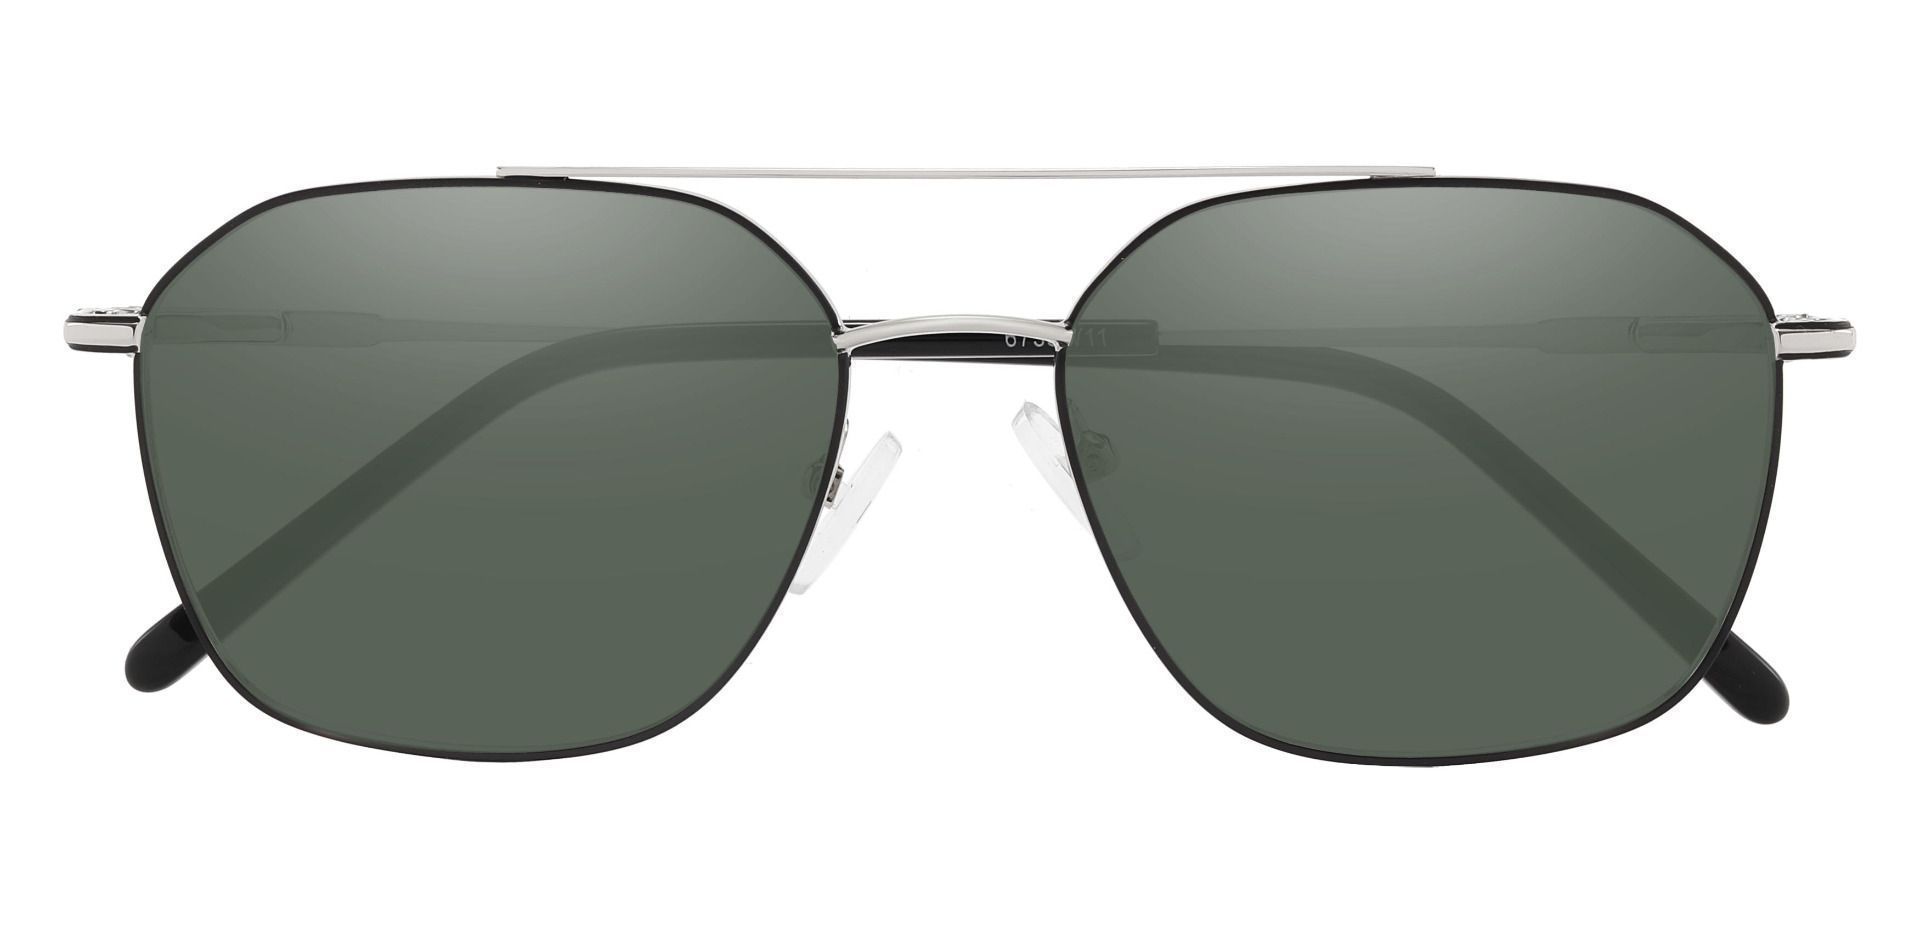 Harvey Aviator Non-Rx Sunglasses - Silver Frame With Green Lenses